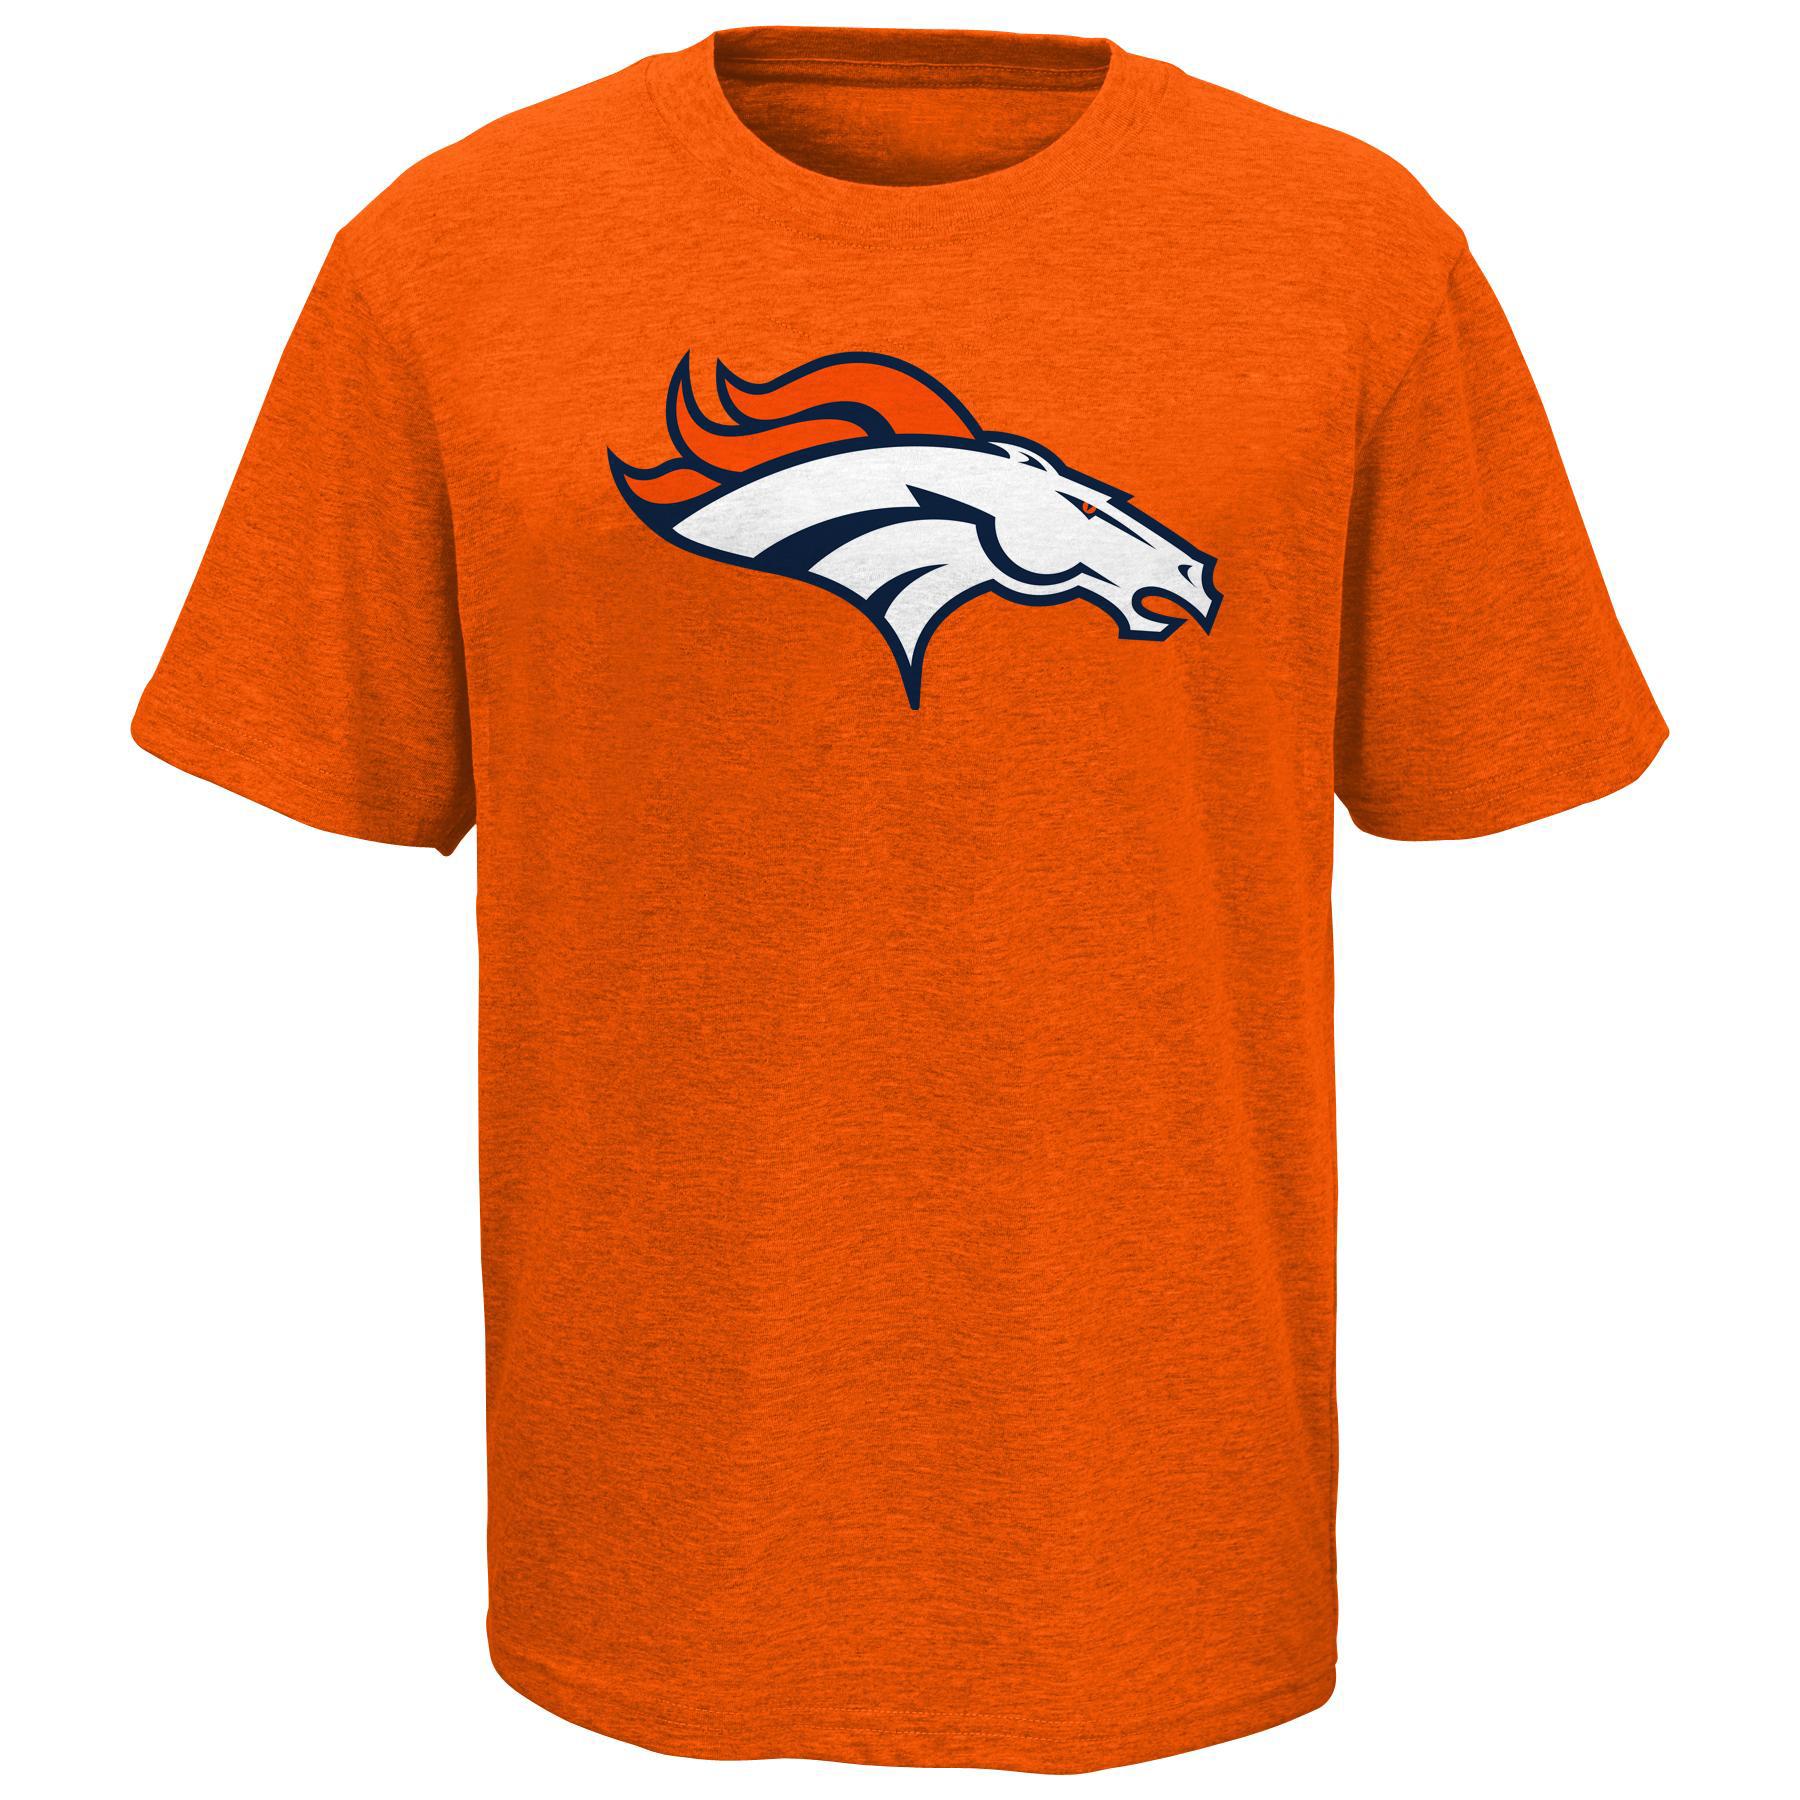 NFL Boys' Performance T-Shirt - Denver Broncos